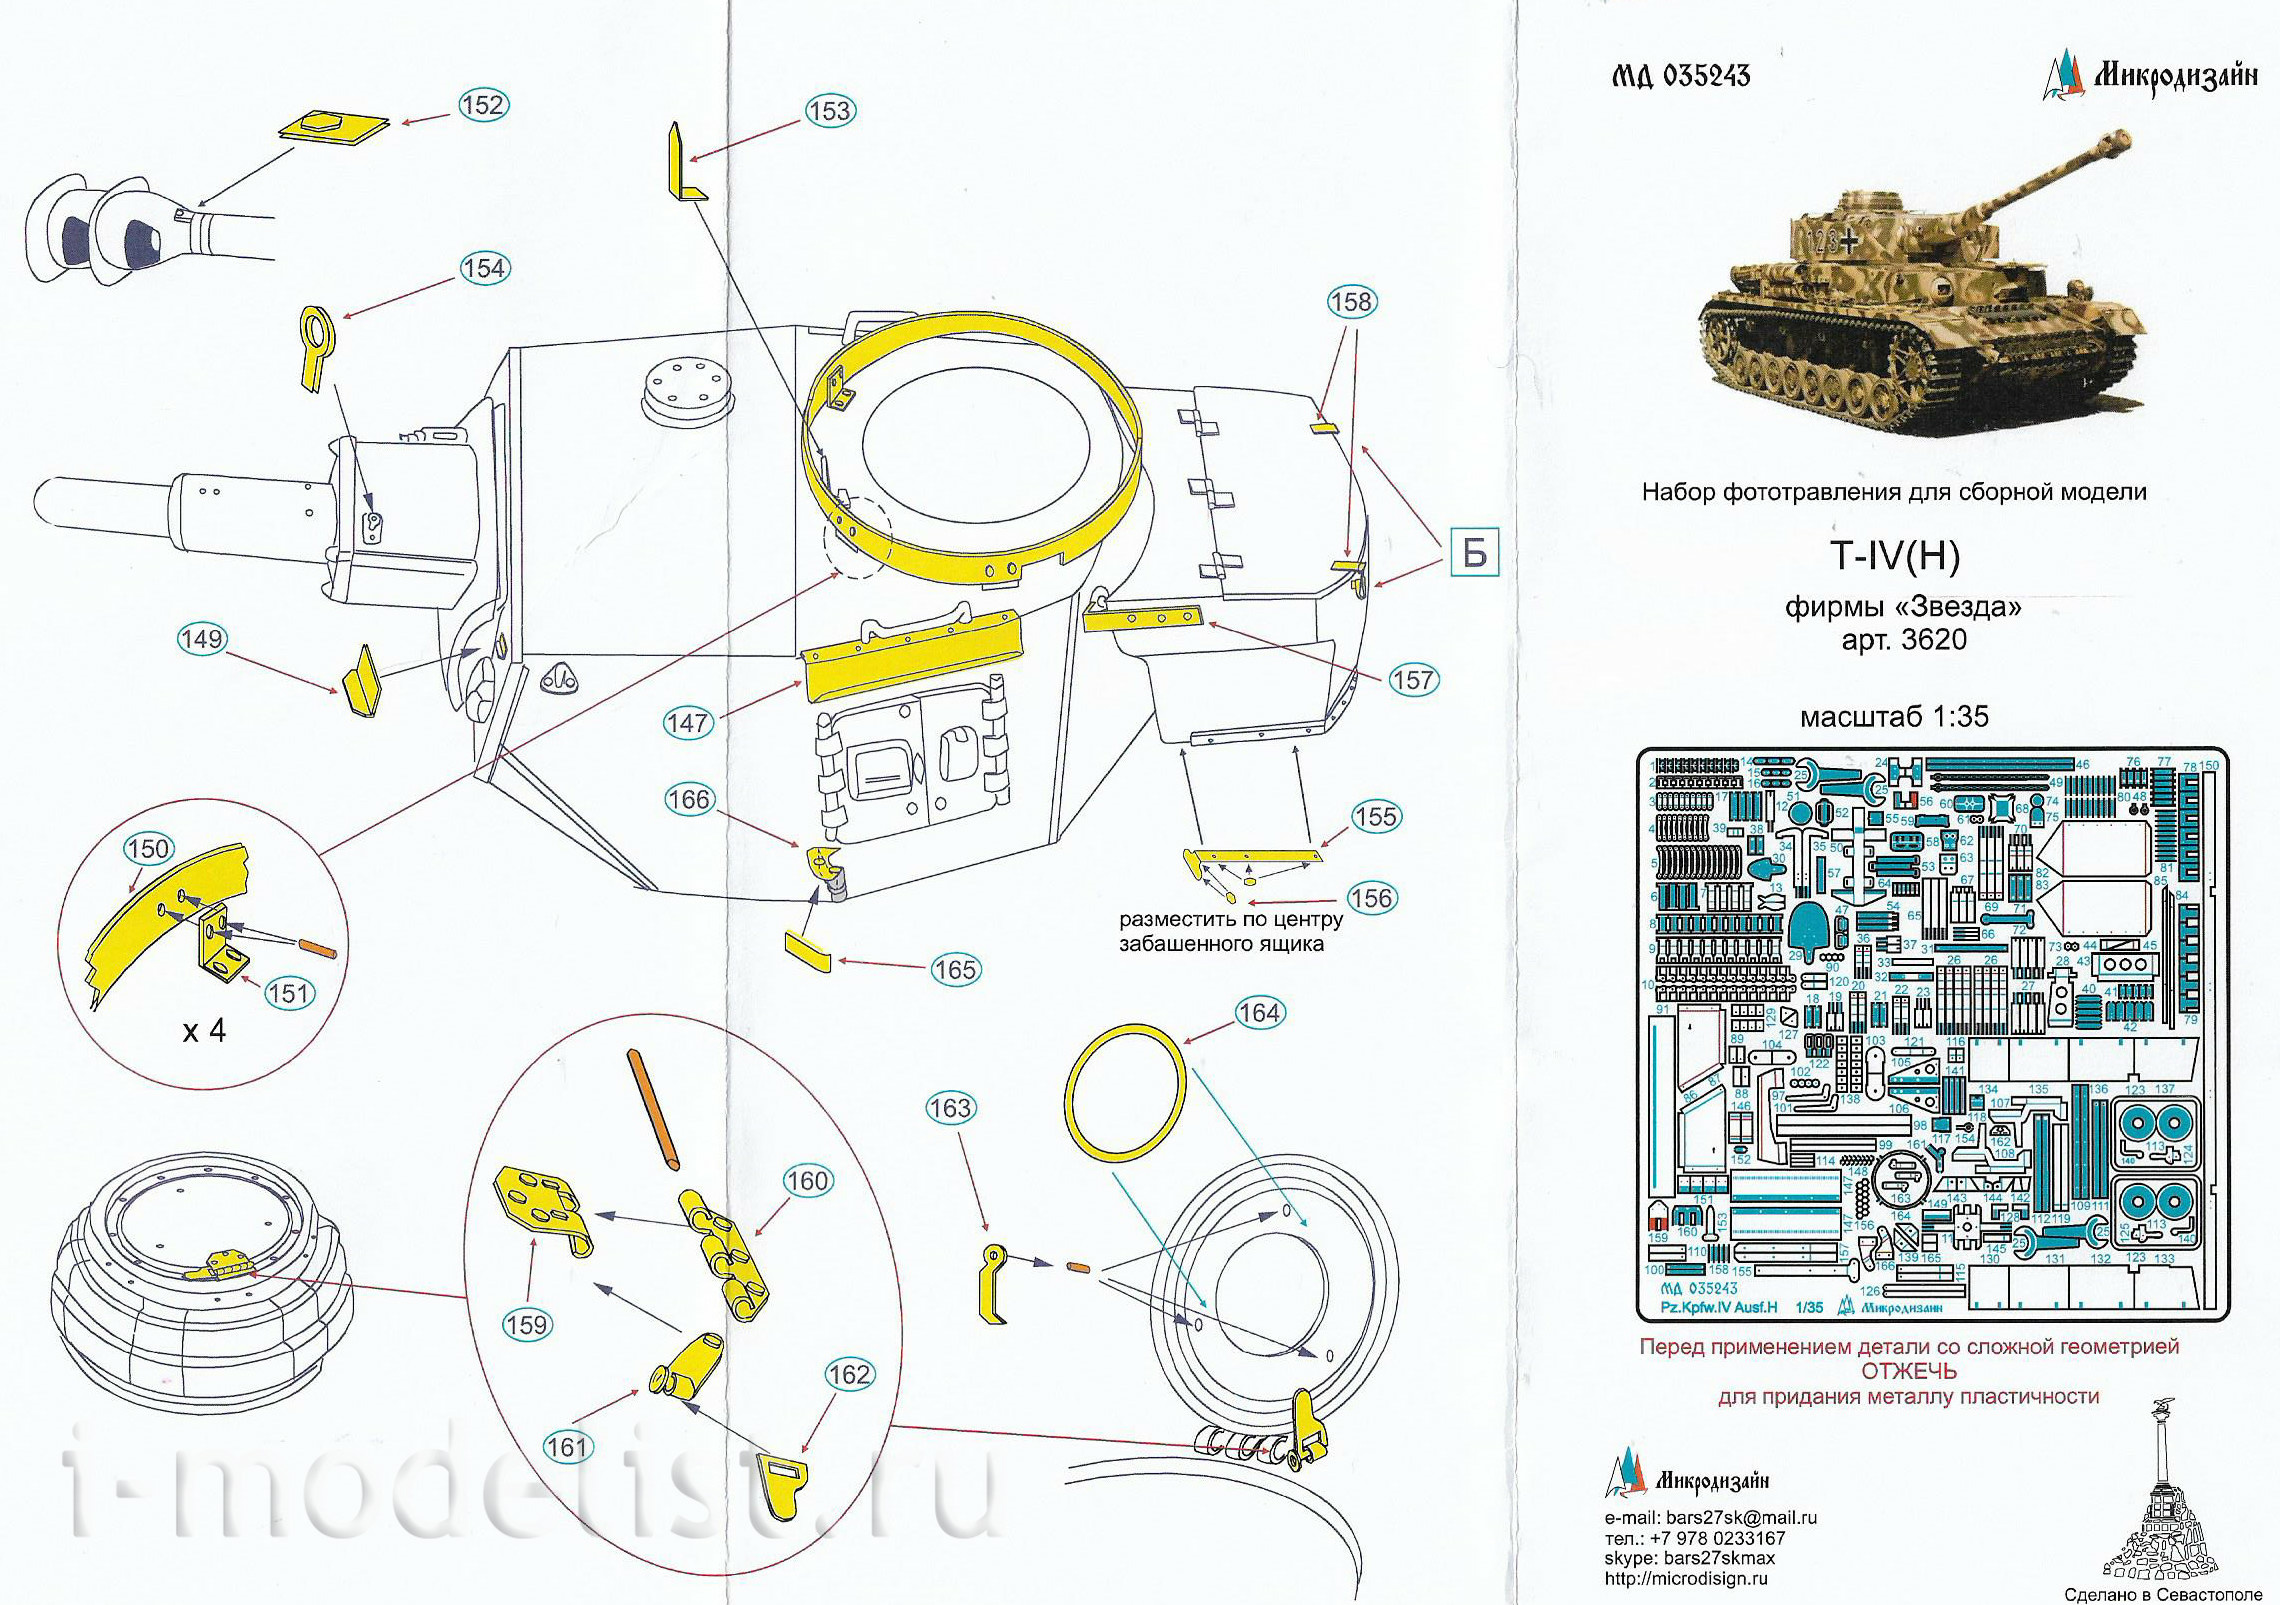 035243 Microdesign 1/35 T-IV main set